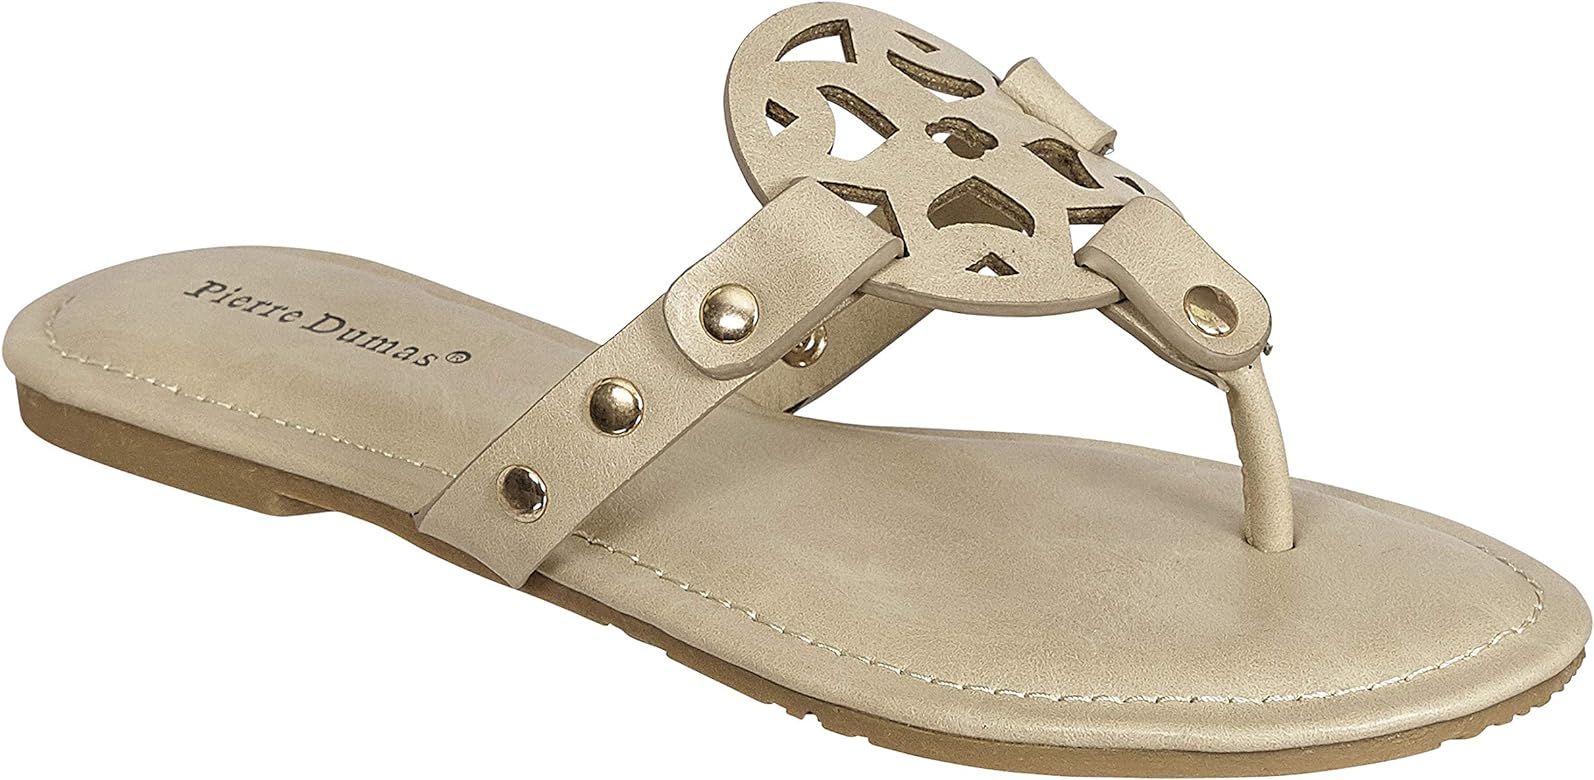 Shoes Women's Pierre Dumas Slip On Open Toe Fashion Sandals | Amazon (US)